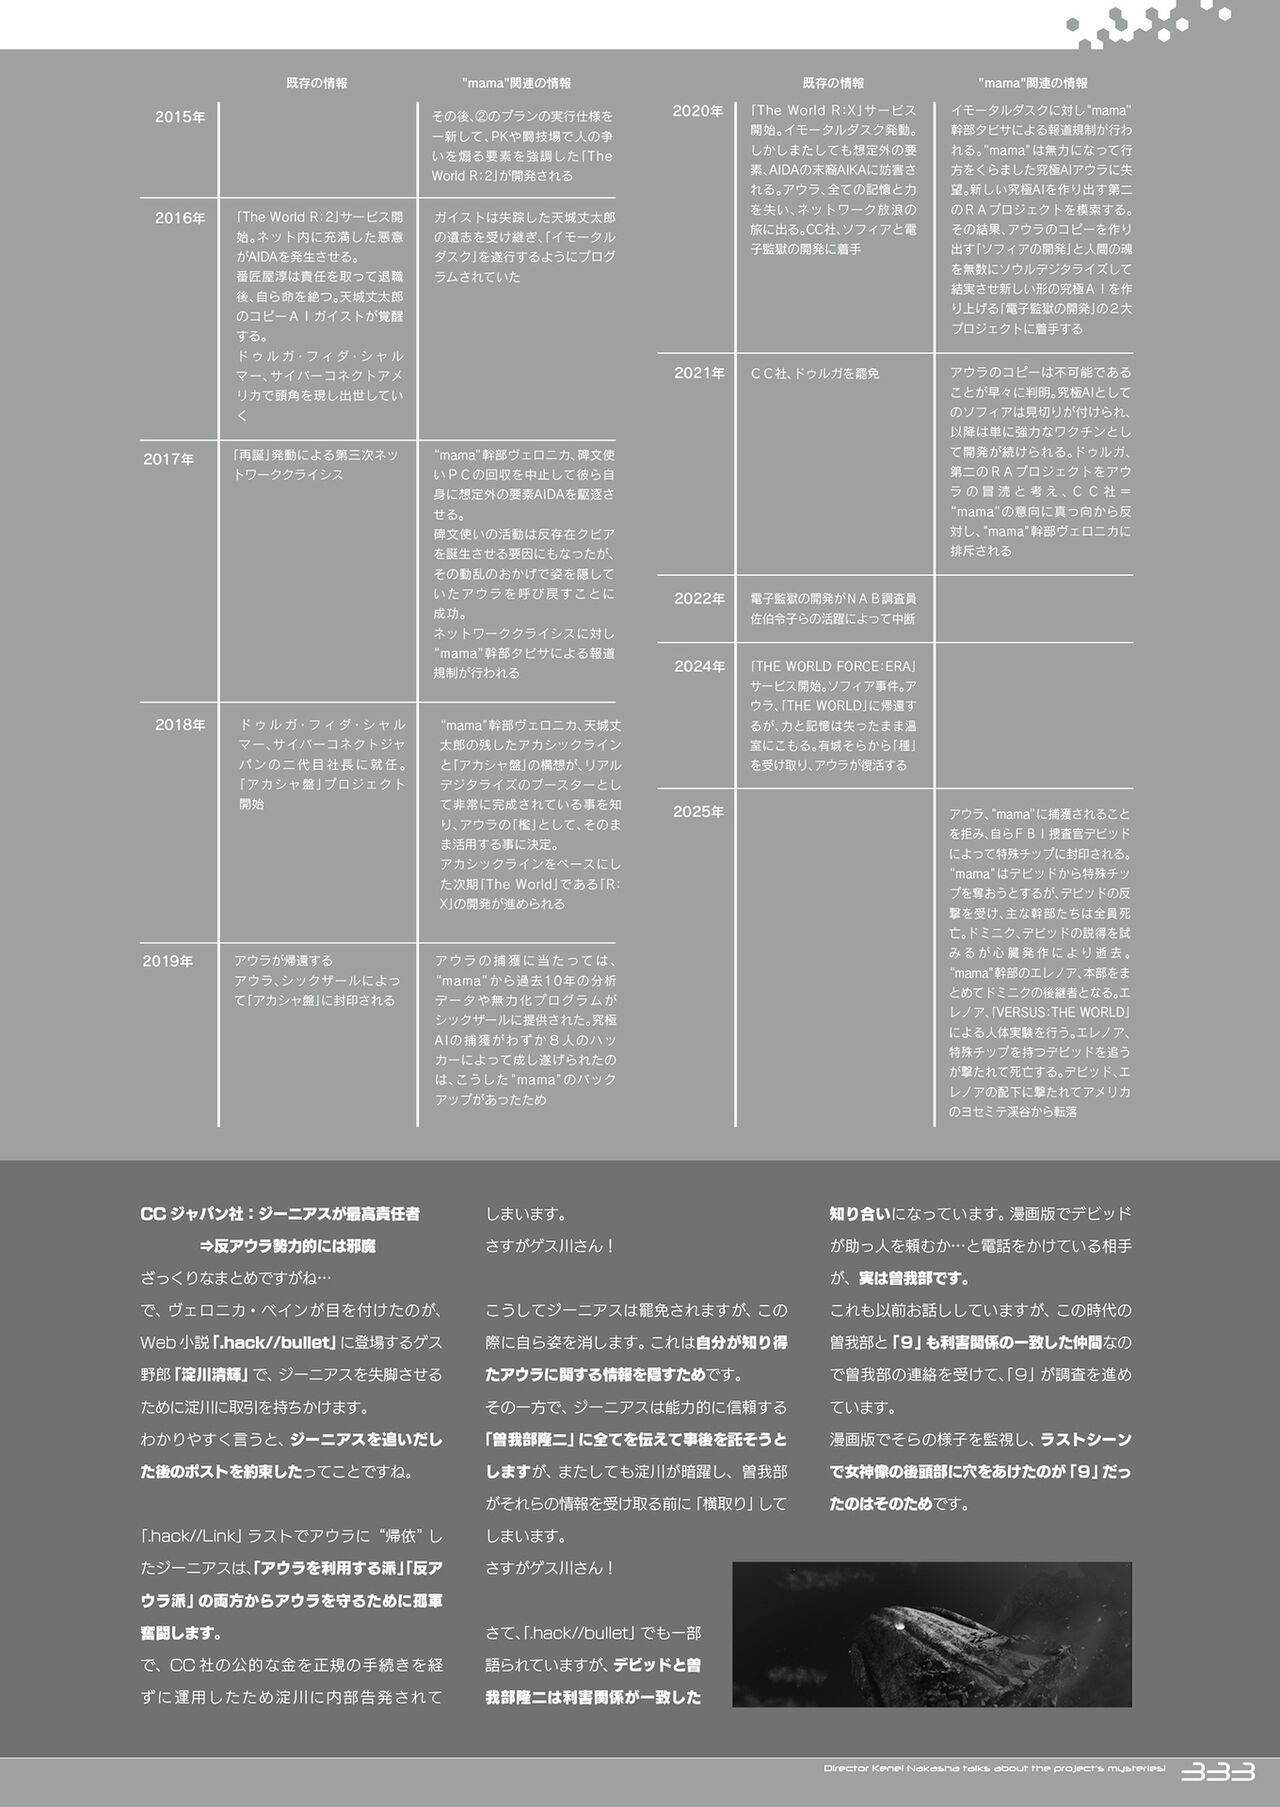 Dot Hack Sekai-no Muko ni  +Versus Complete Set  Documentation .hack //Archives _ 05 335